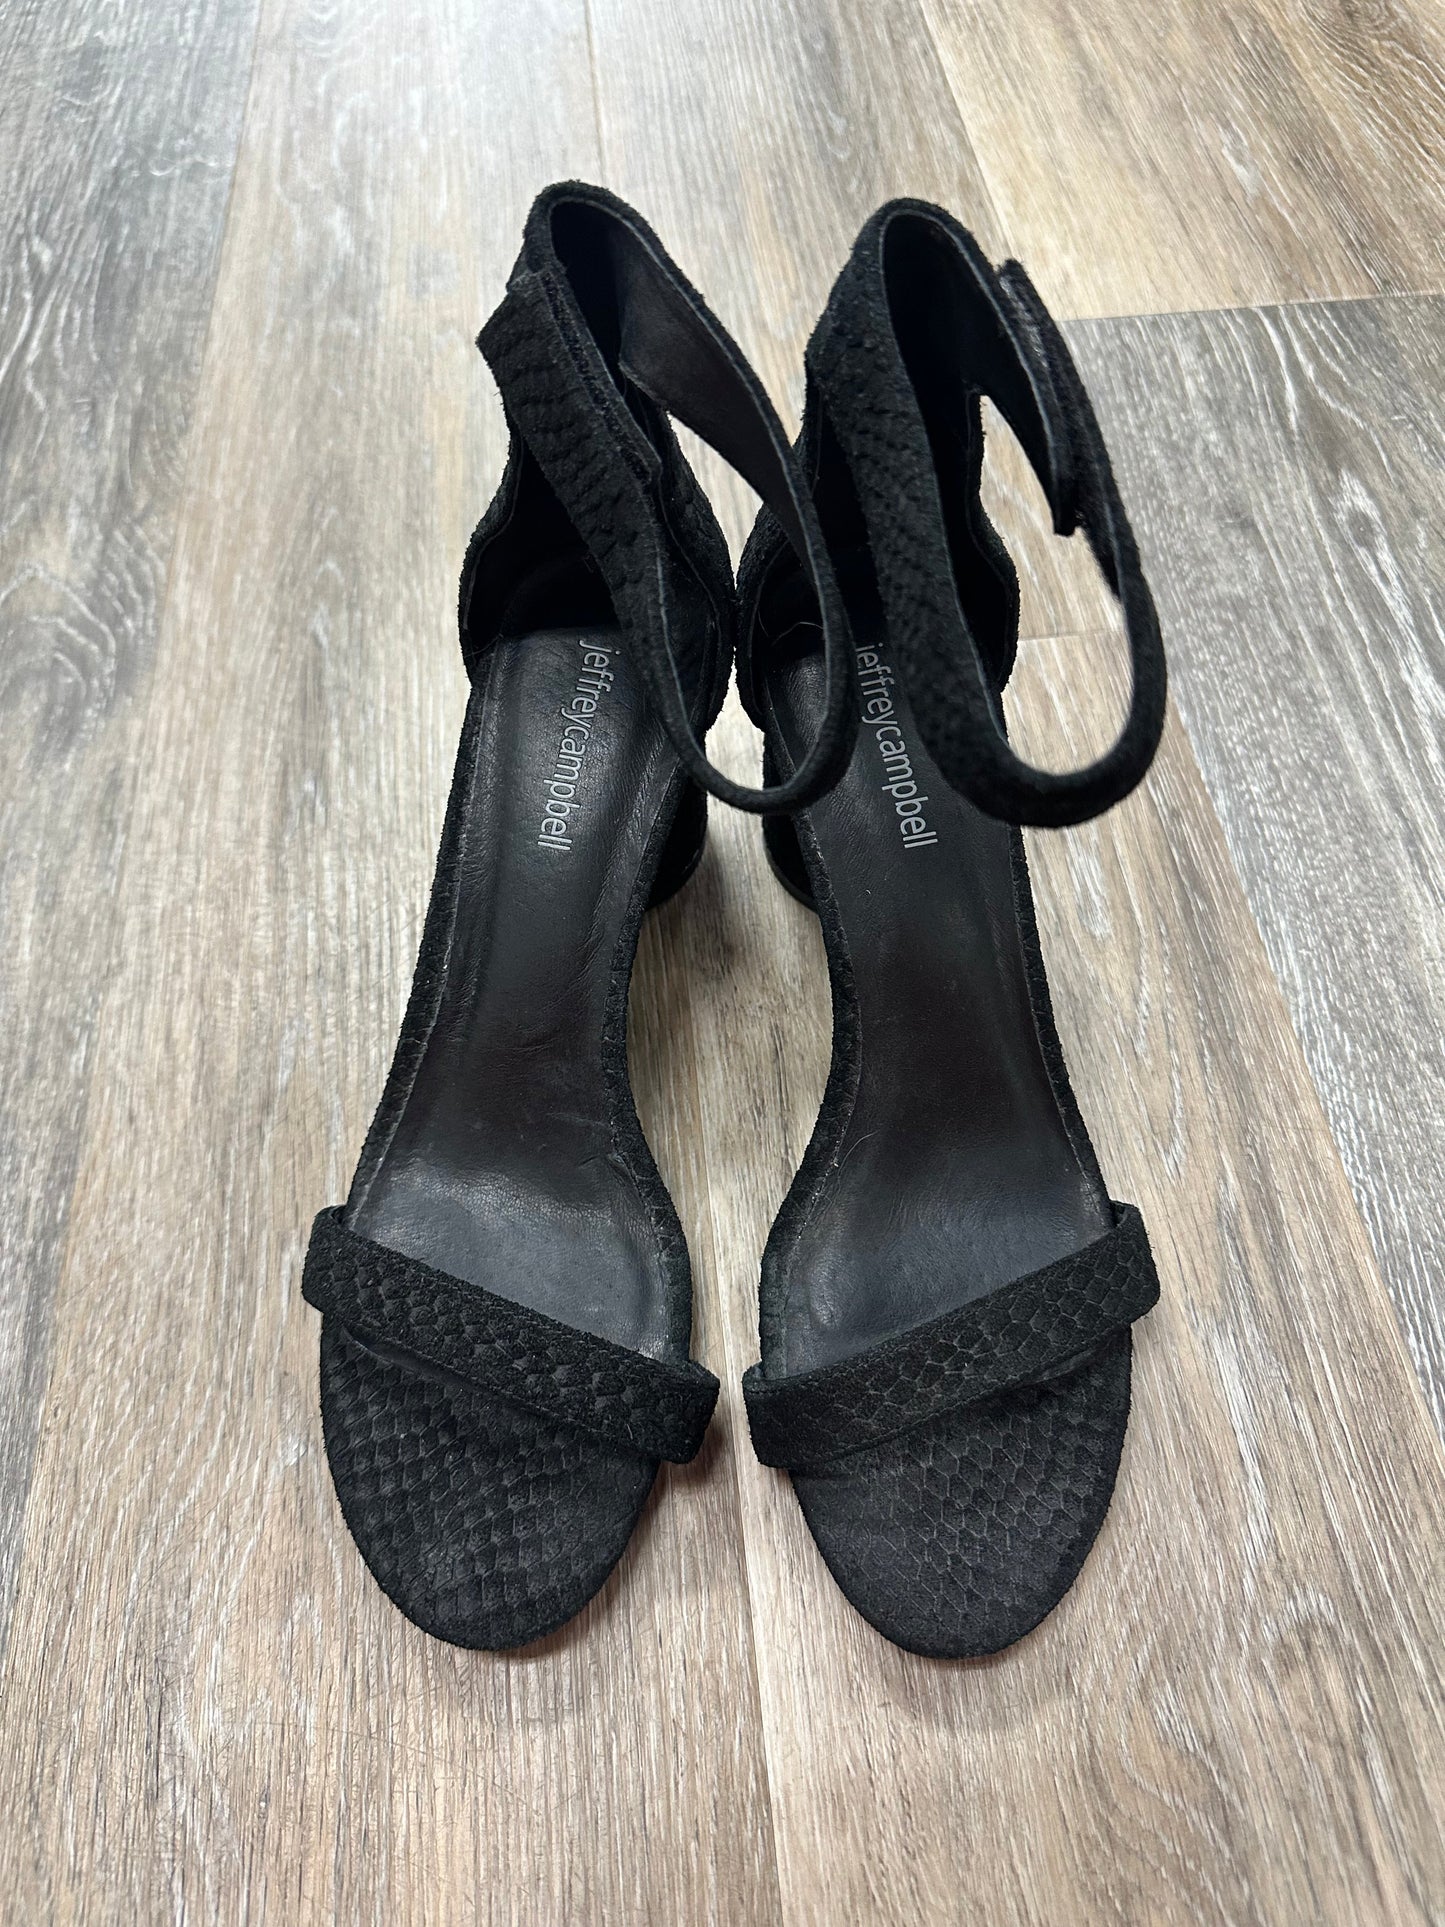 Sandals Heels Block By Jeffery Campbell  Size: 8.5